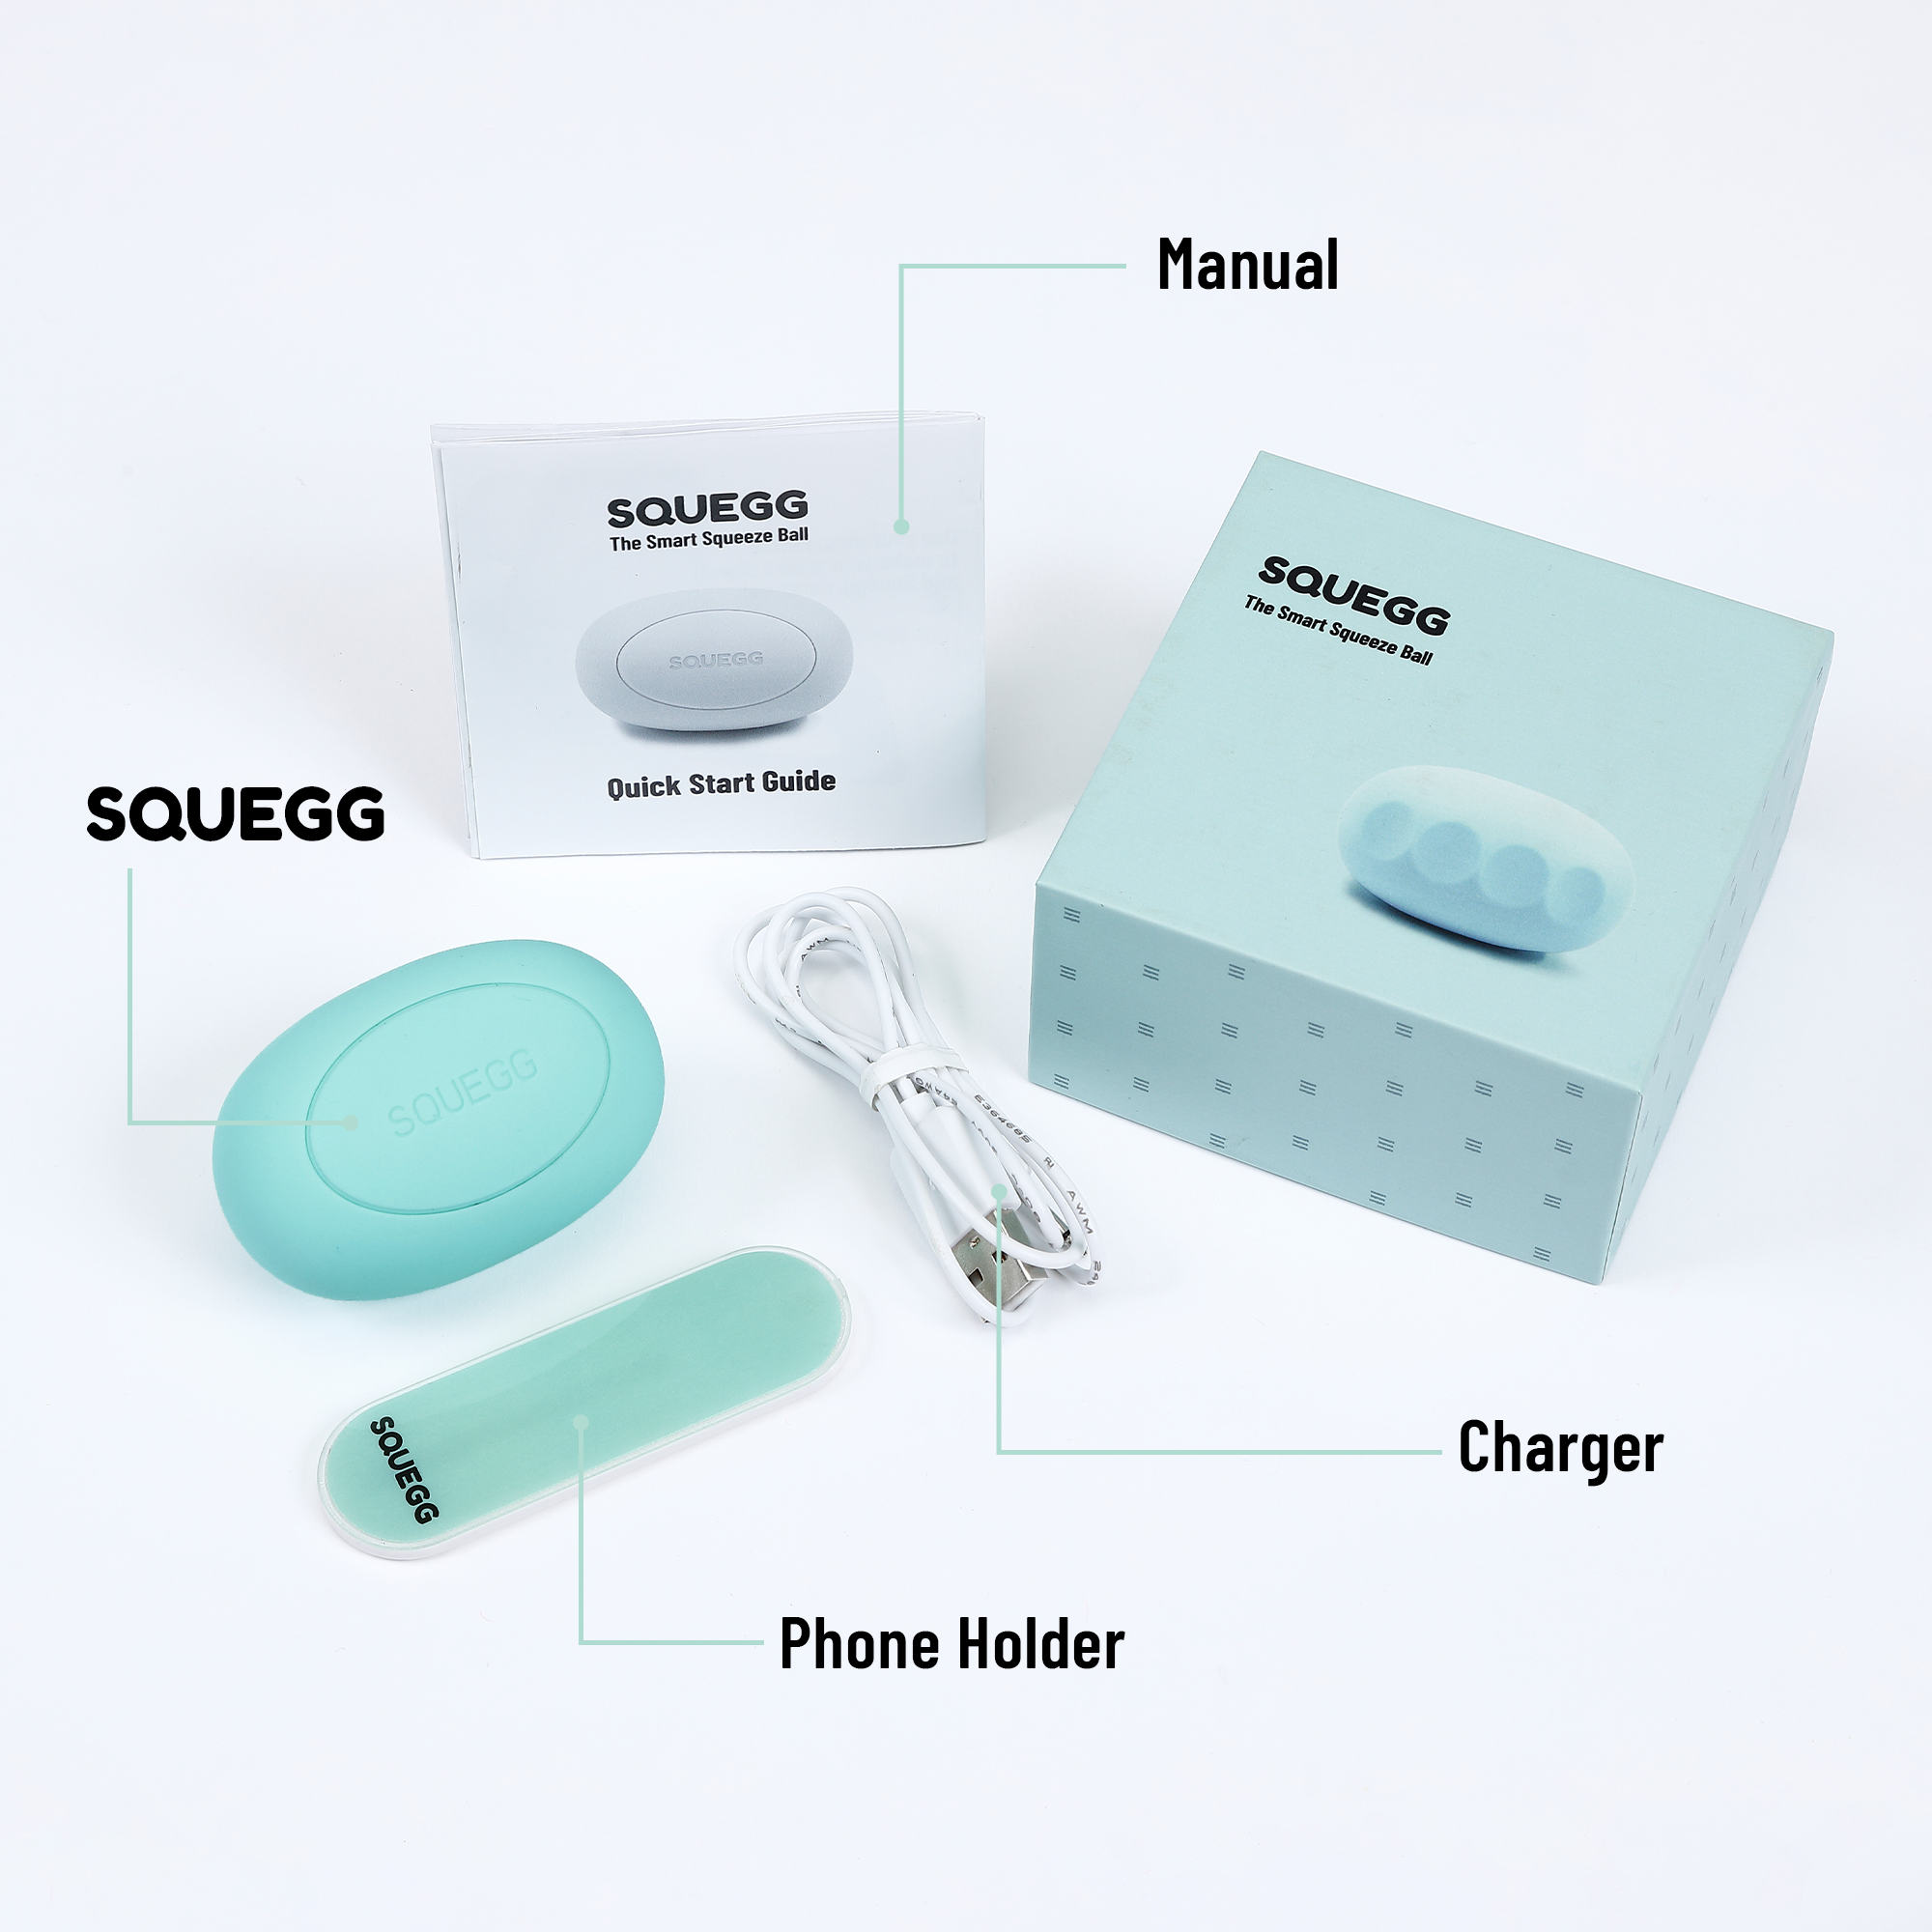 Squegg - digitale handtrainer